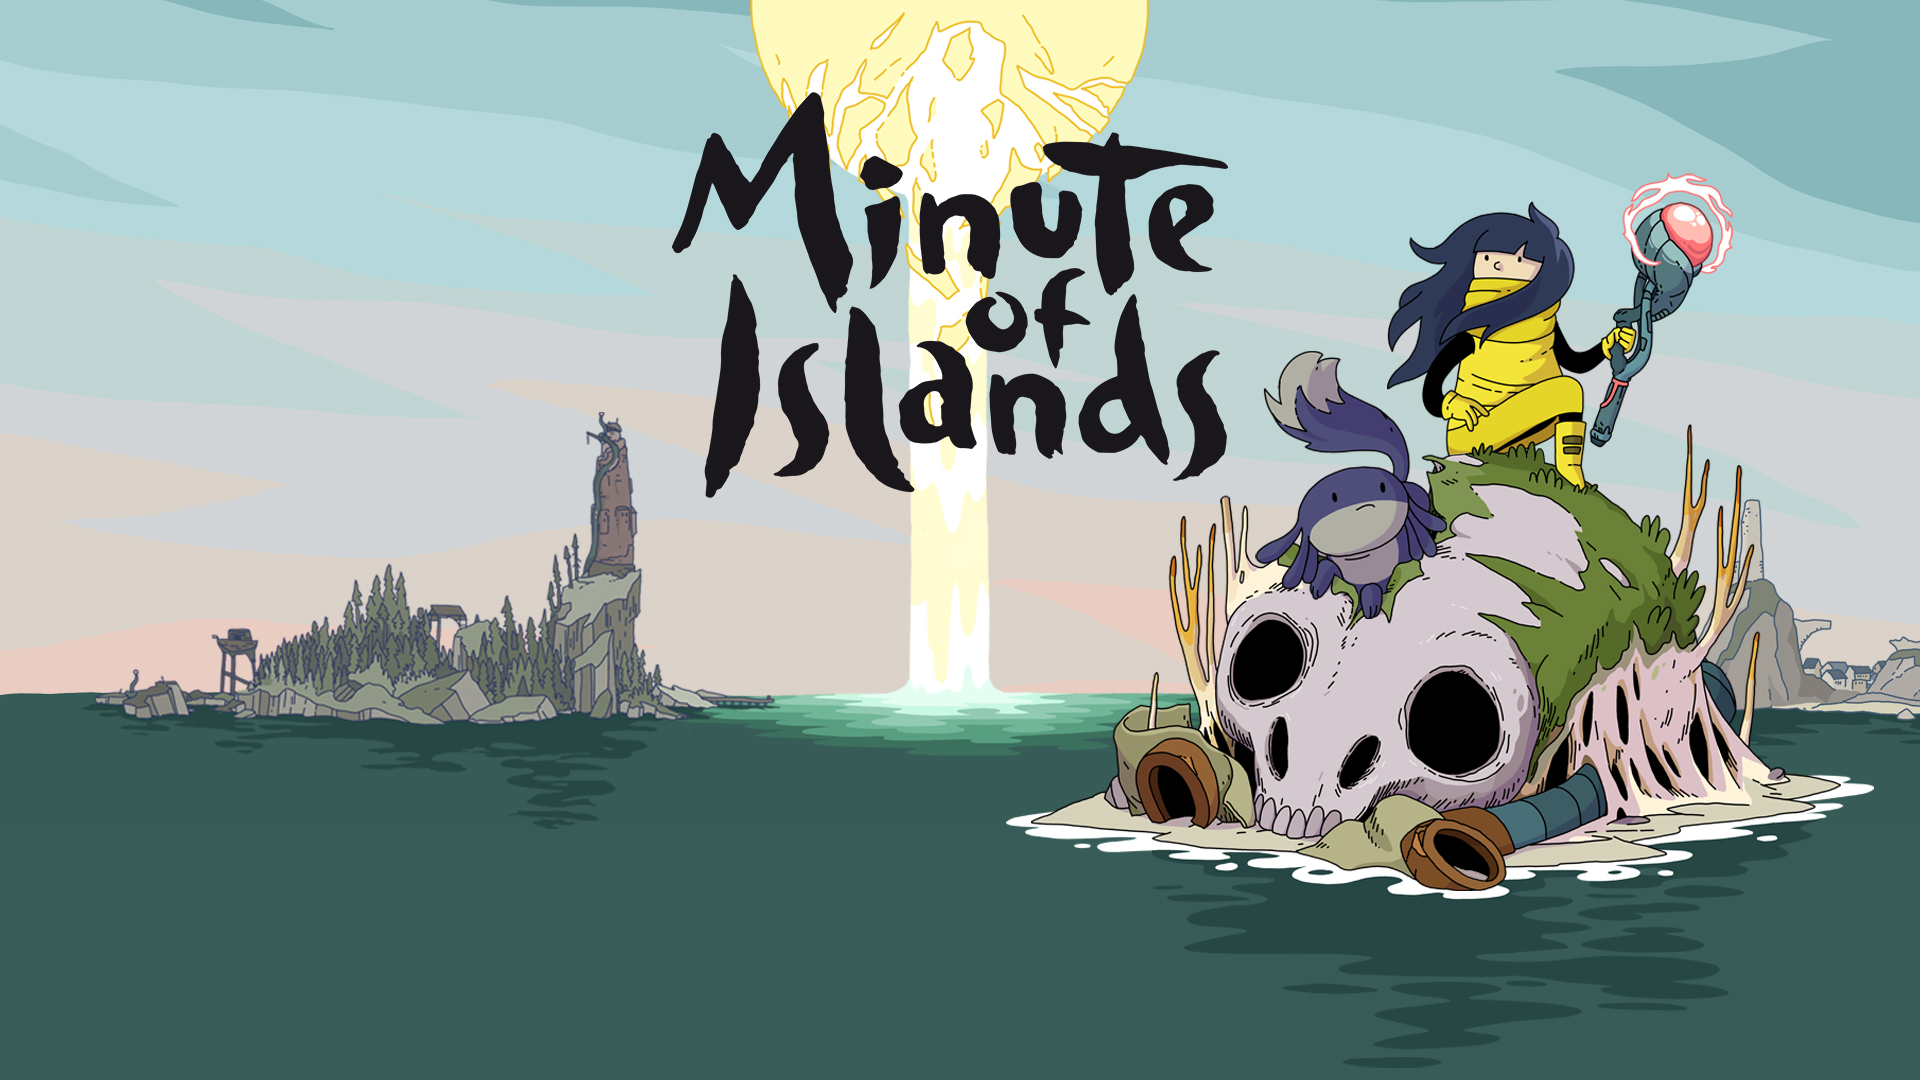 minute of islands download